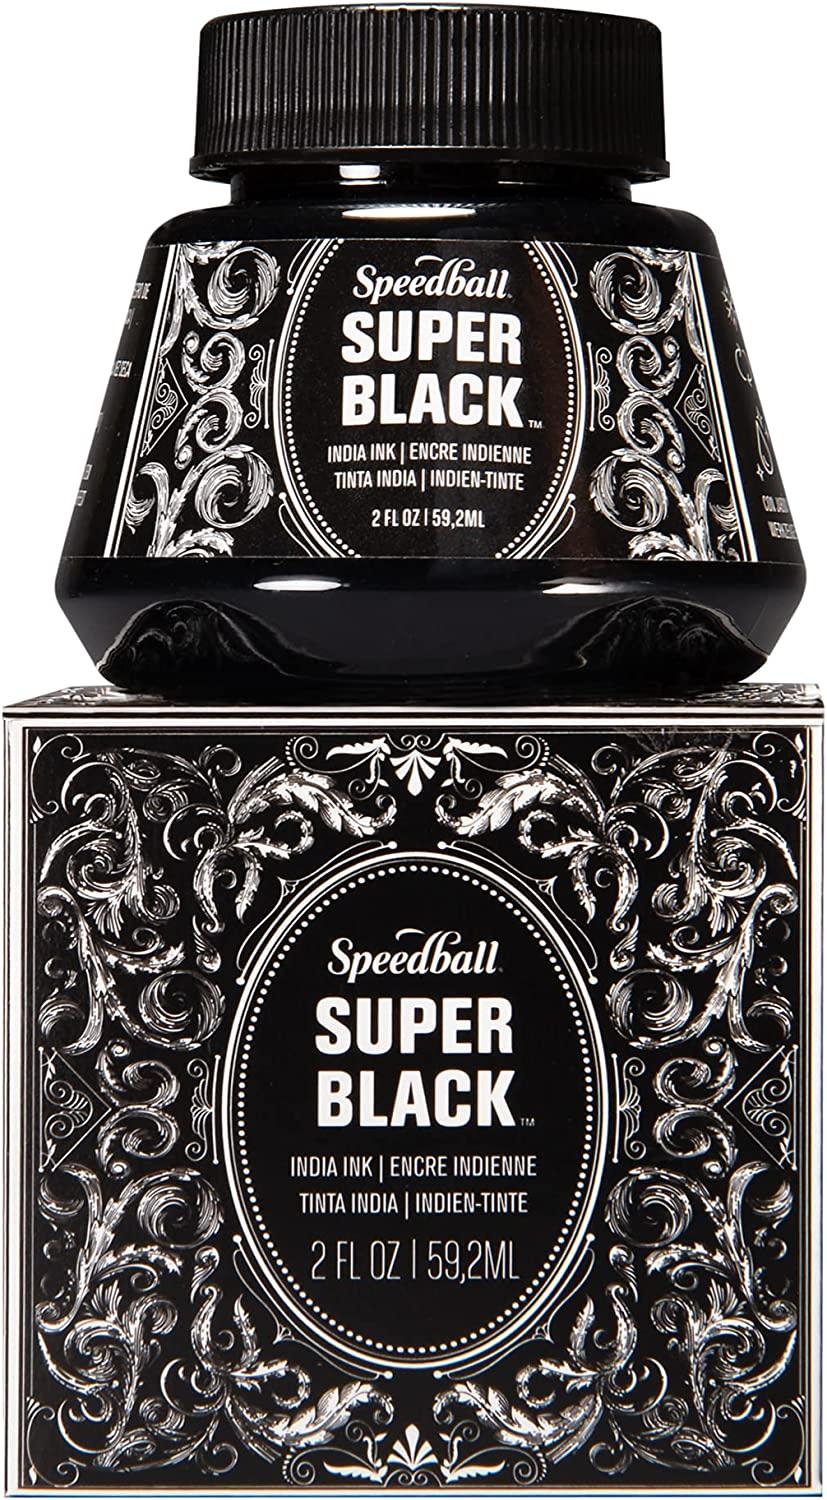 Review – Speedball Super Black Ink